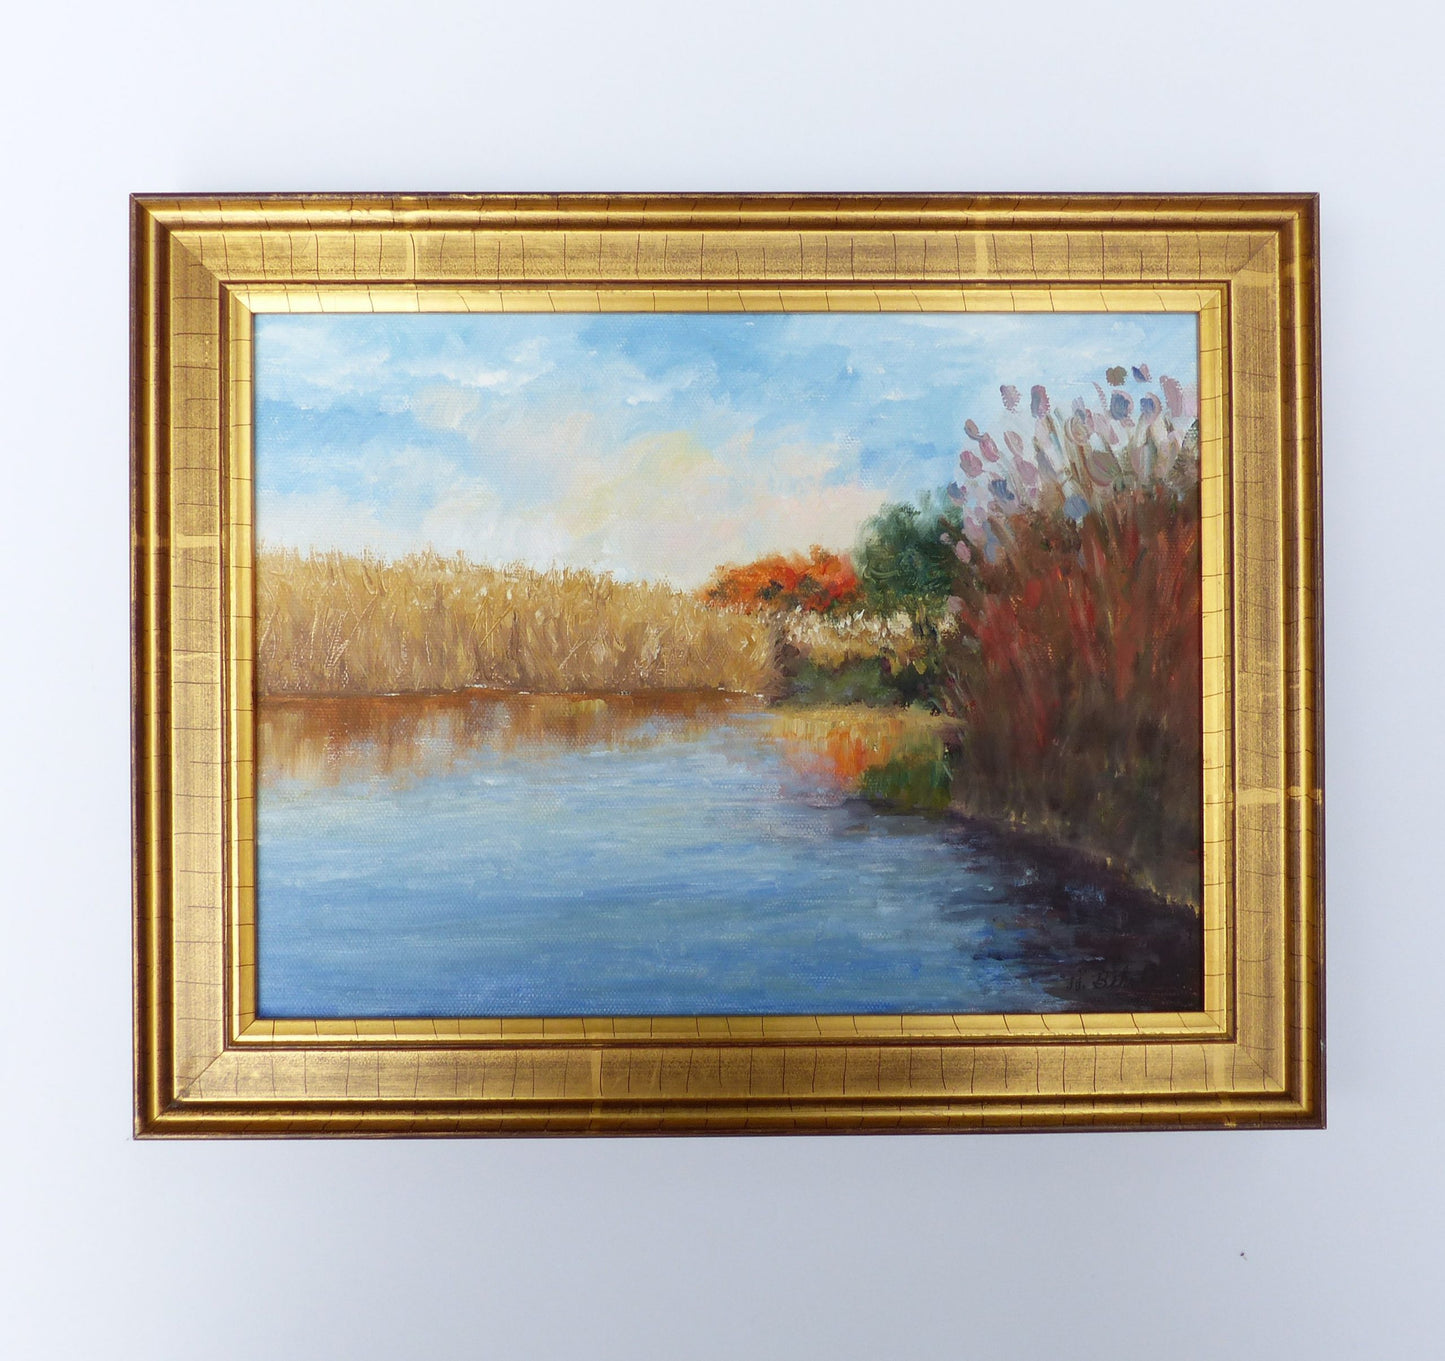 Painting in Acrylics “Salt Water Marsh” by William Behrle